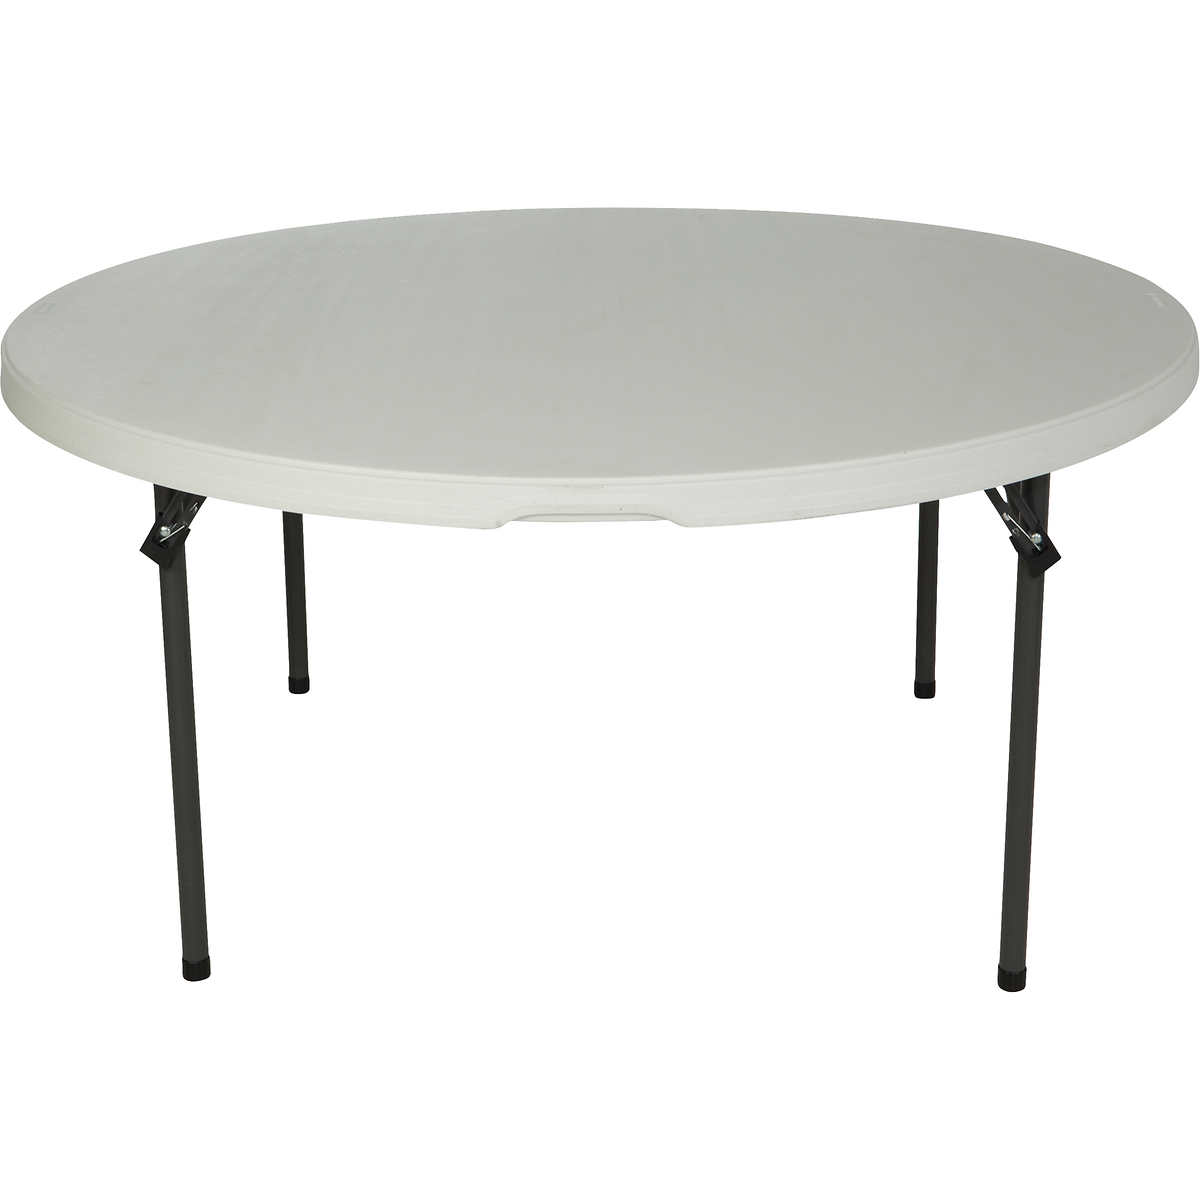 Lifetime Round Folding Table 60 Dia X, 48 Inch Round Folding Table Costco